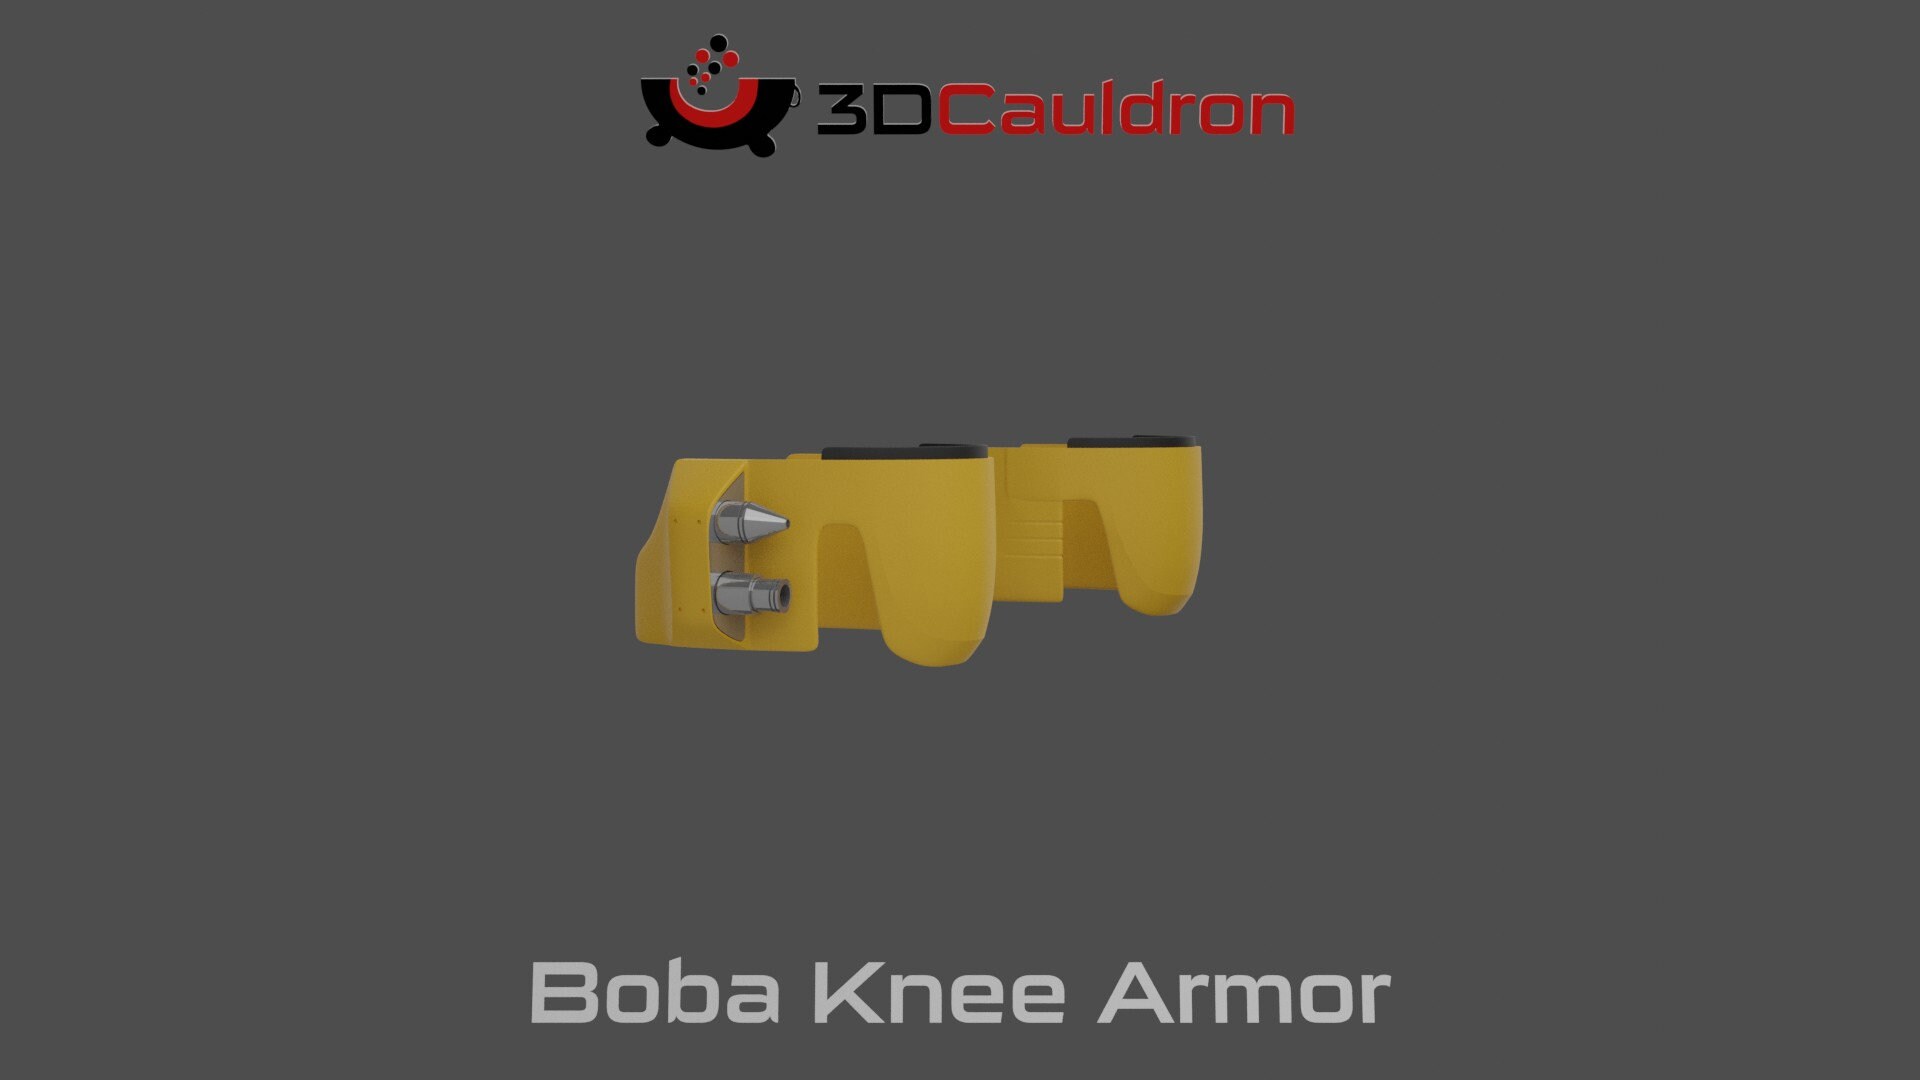 Boba Fett Jetpack from BOBF – 3D Cauldron